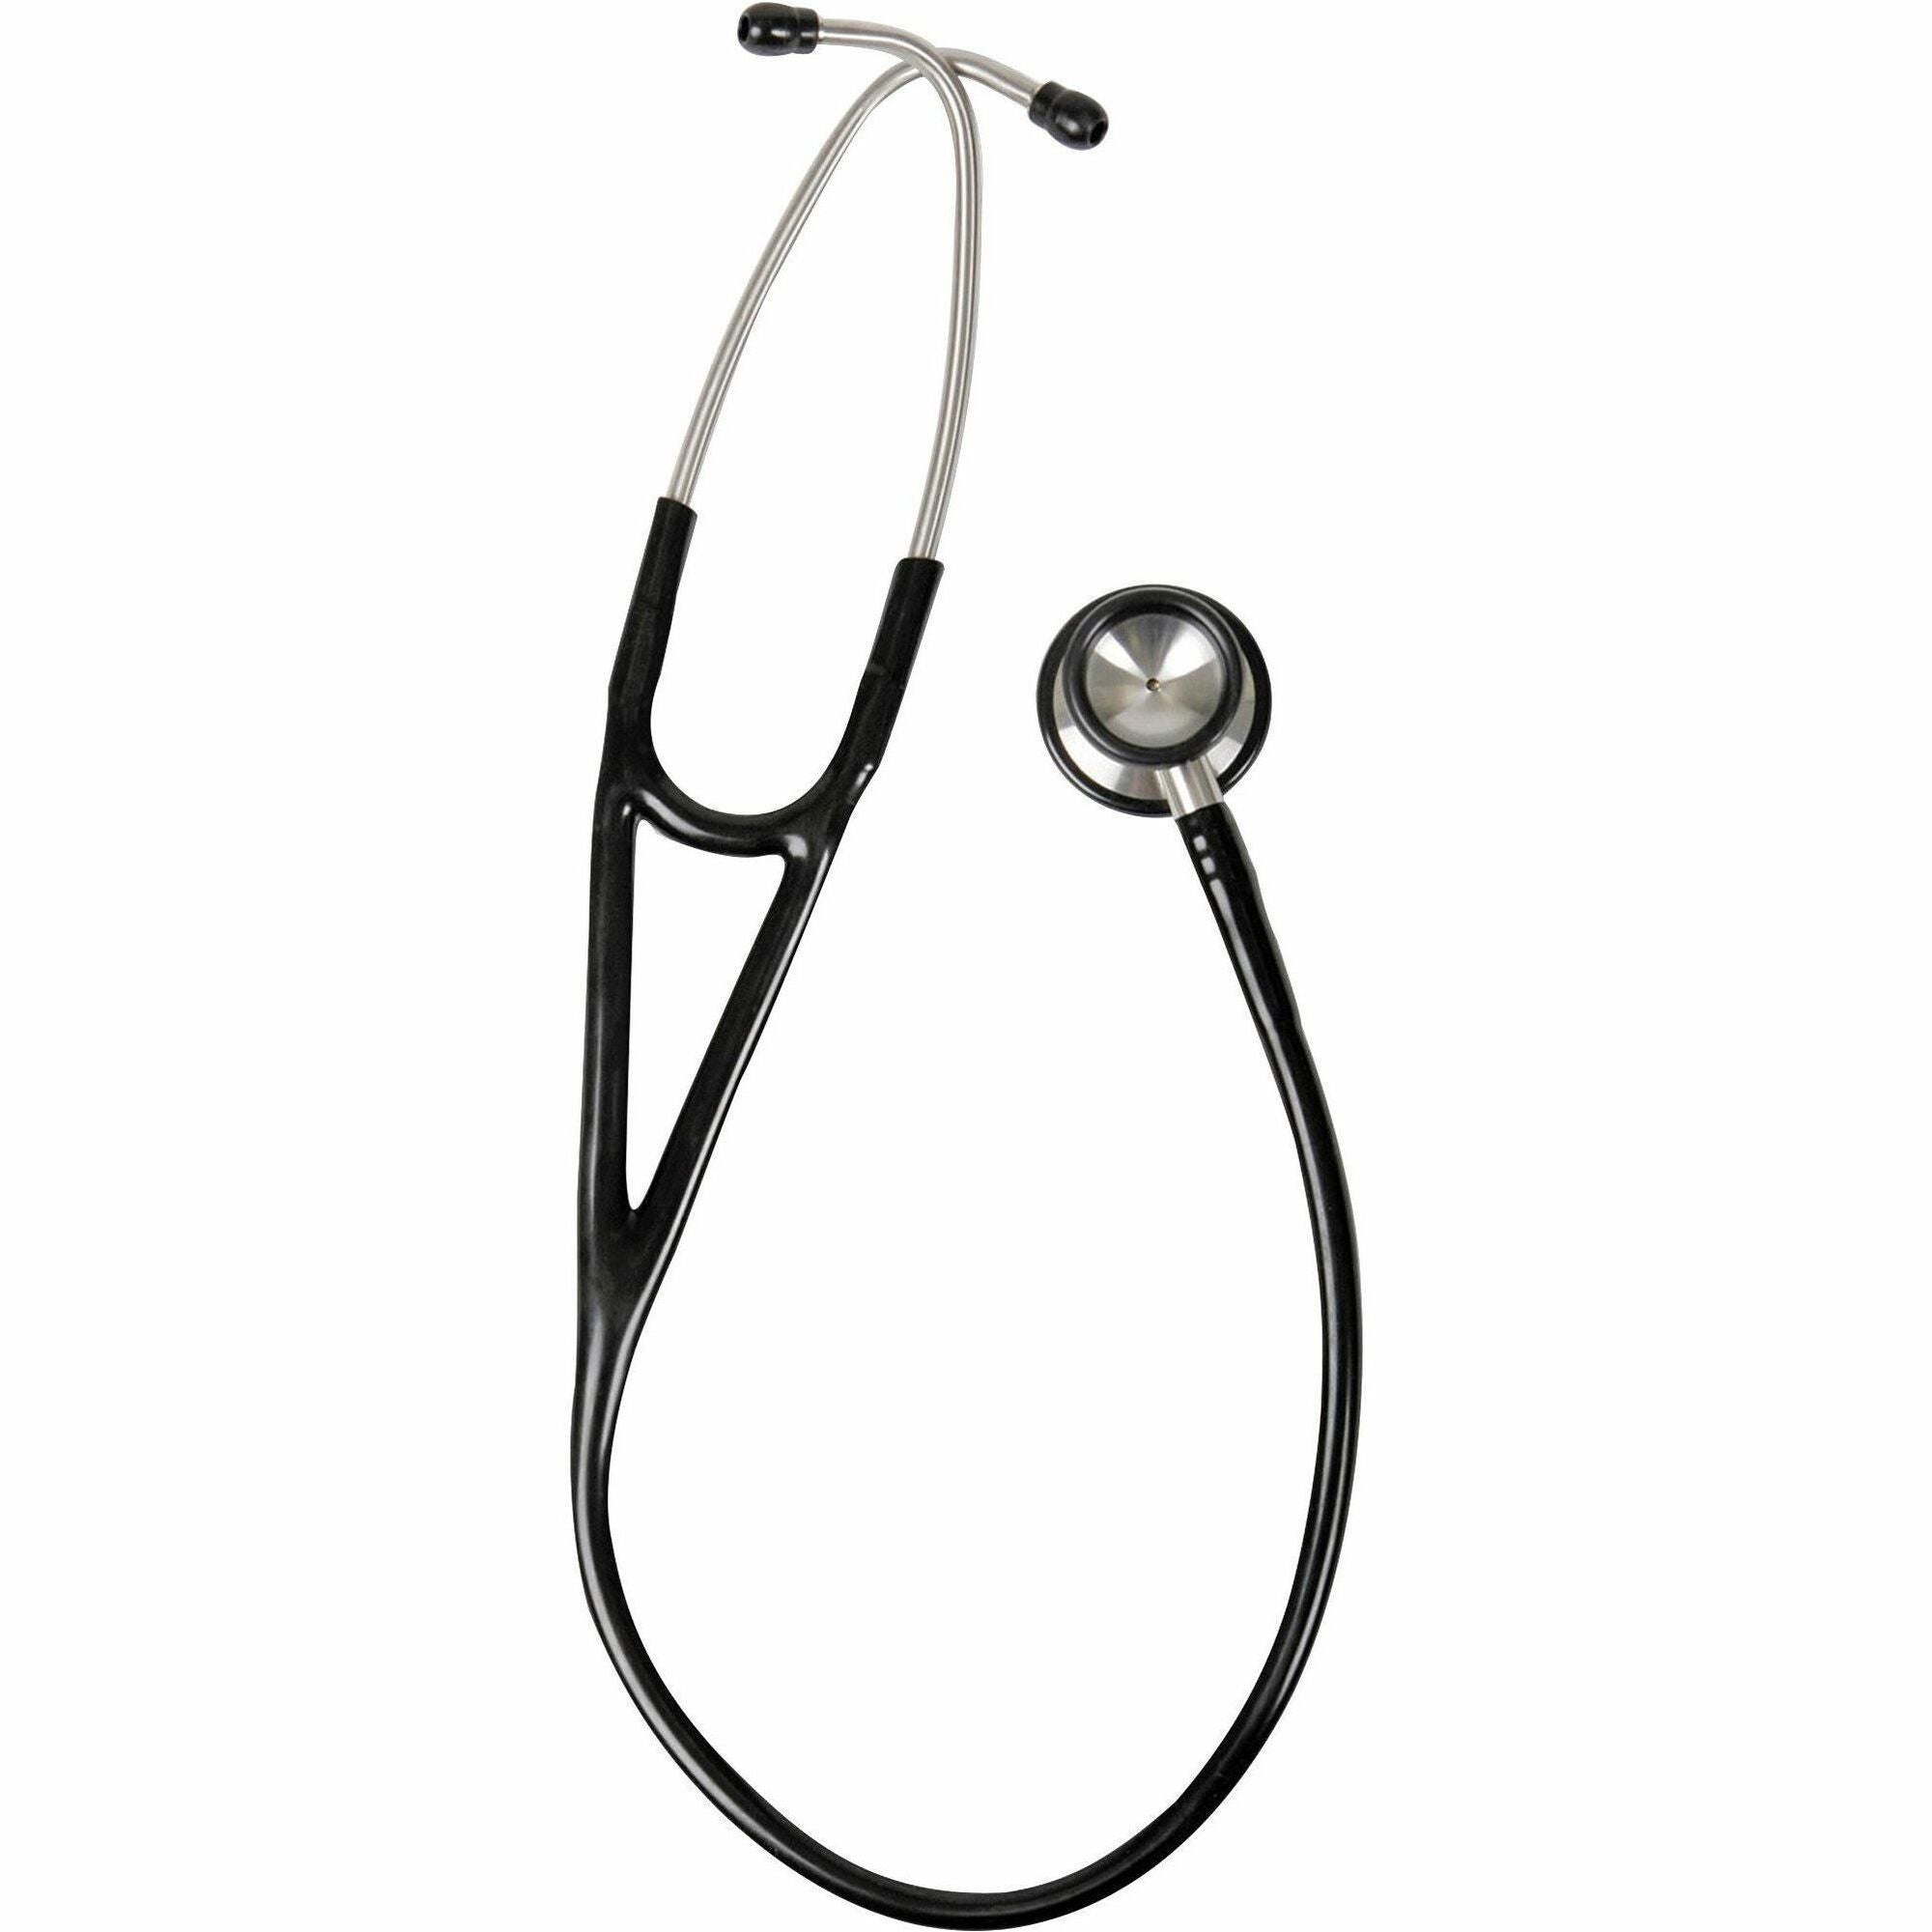 Medline Accucare Cardiology Stethoscope - Black - 